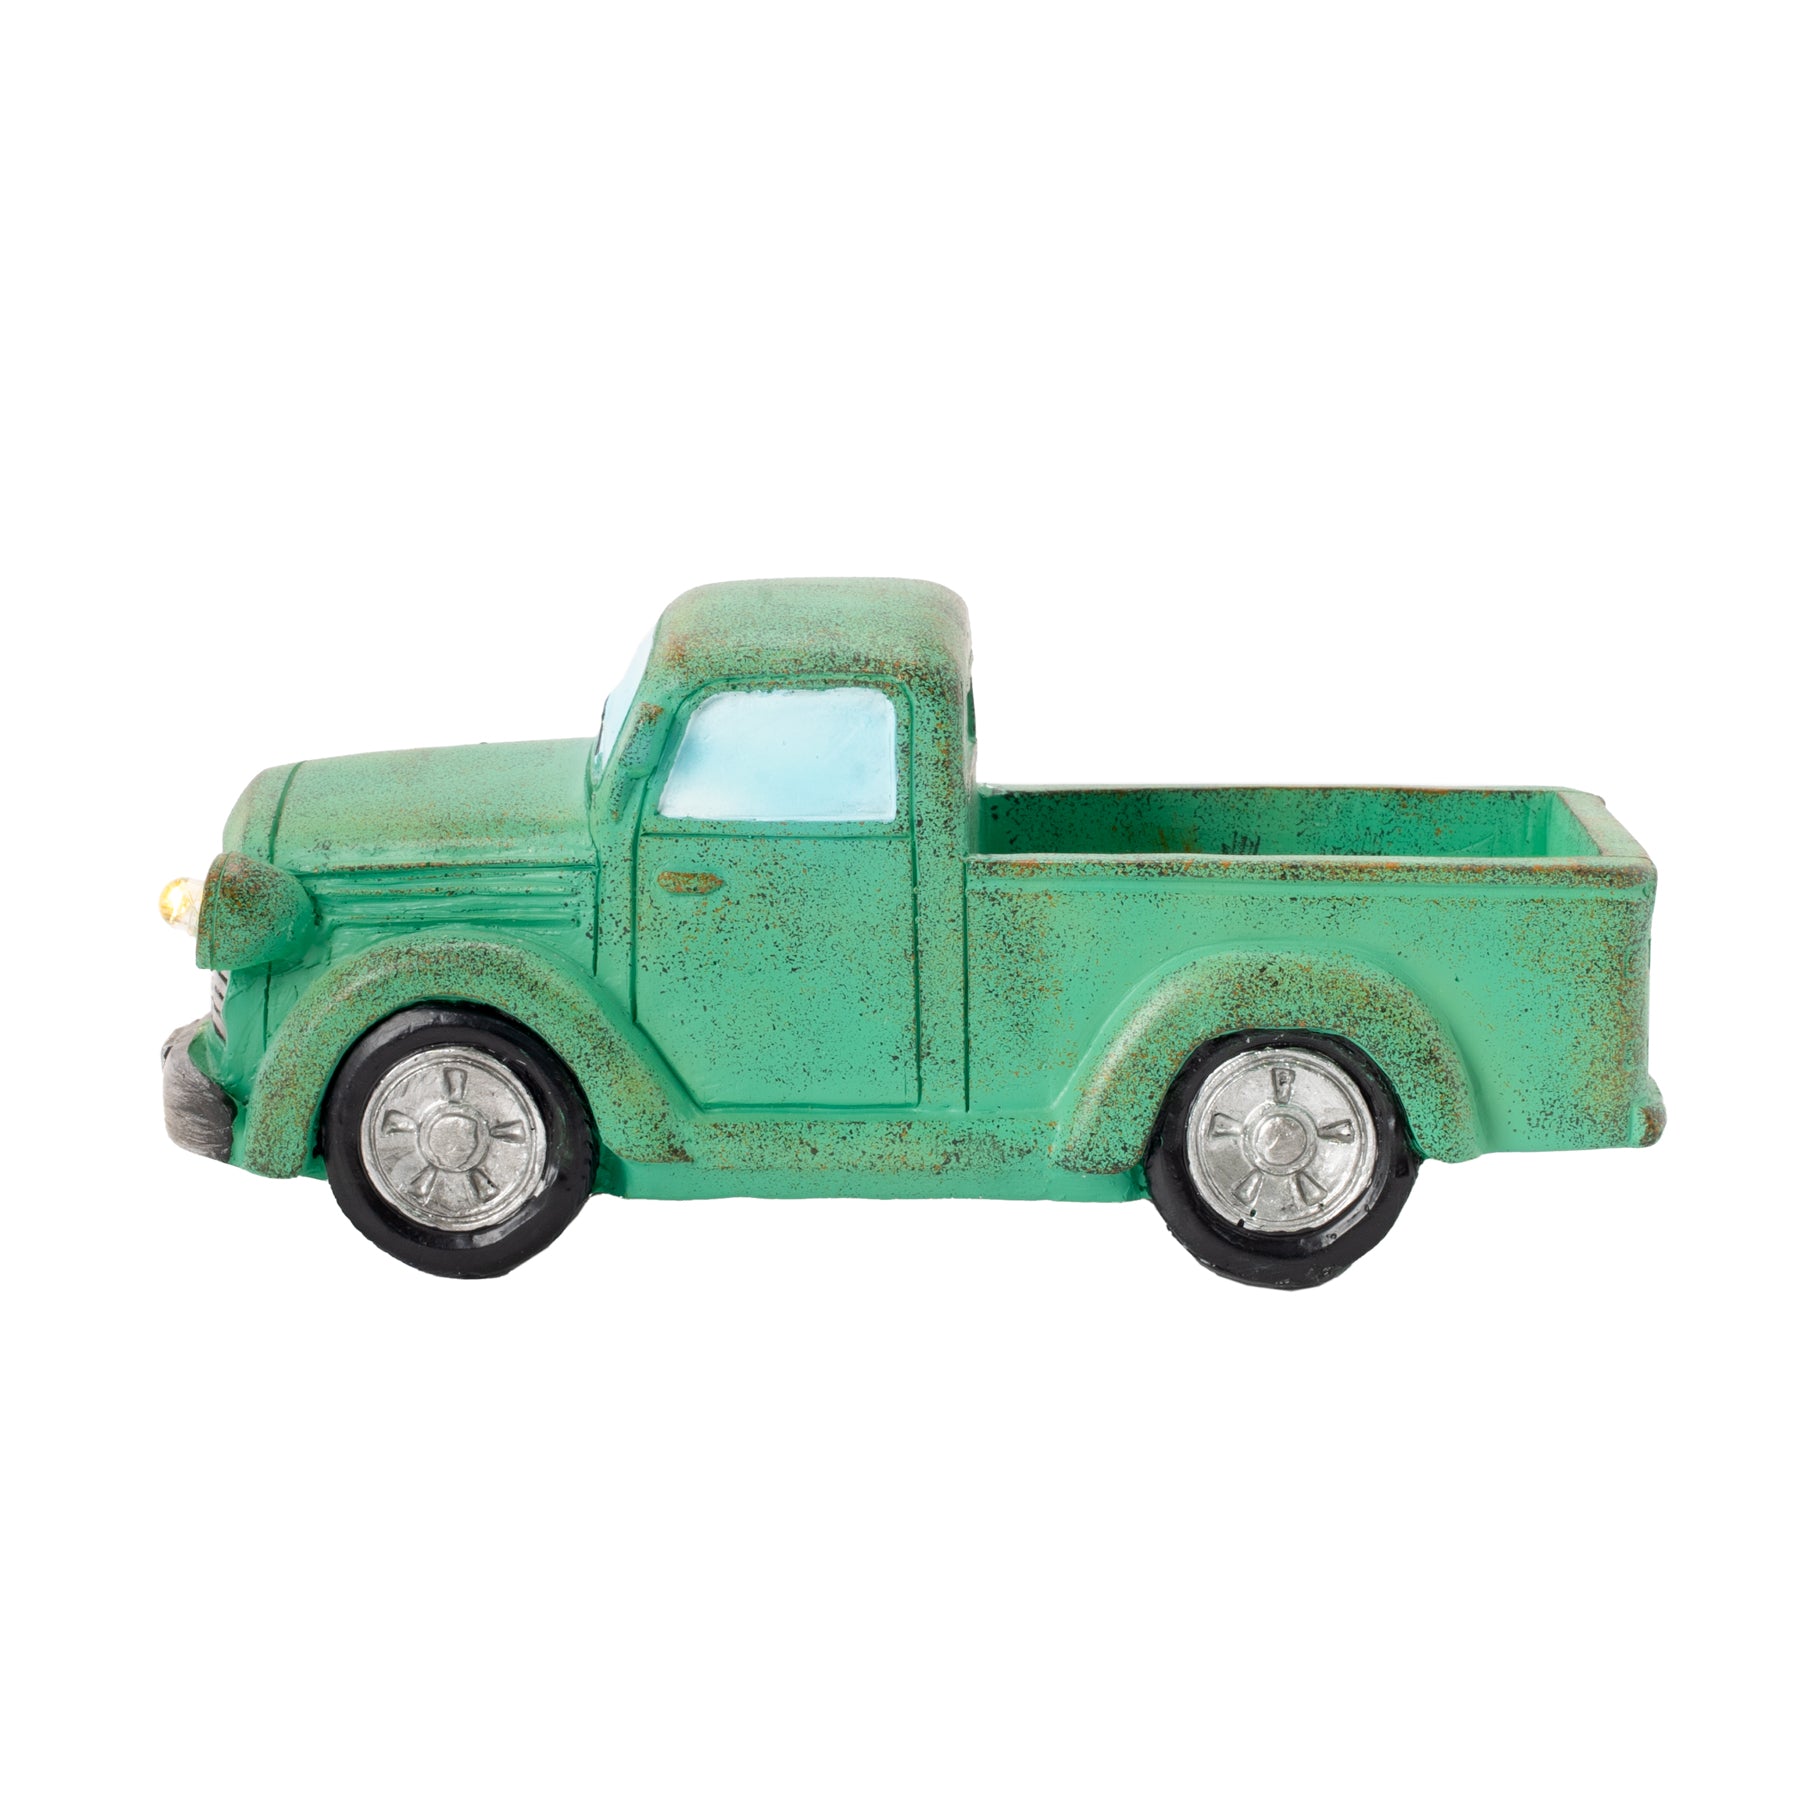 Vintage Green Truck